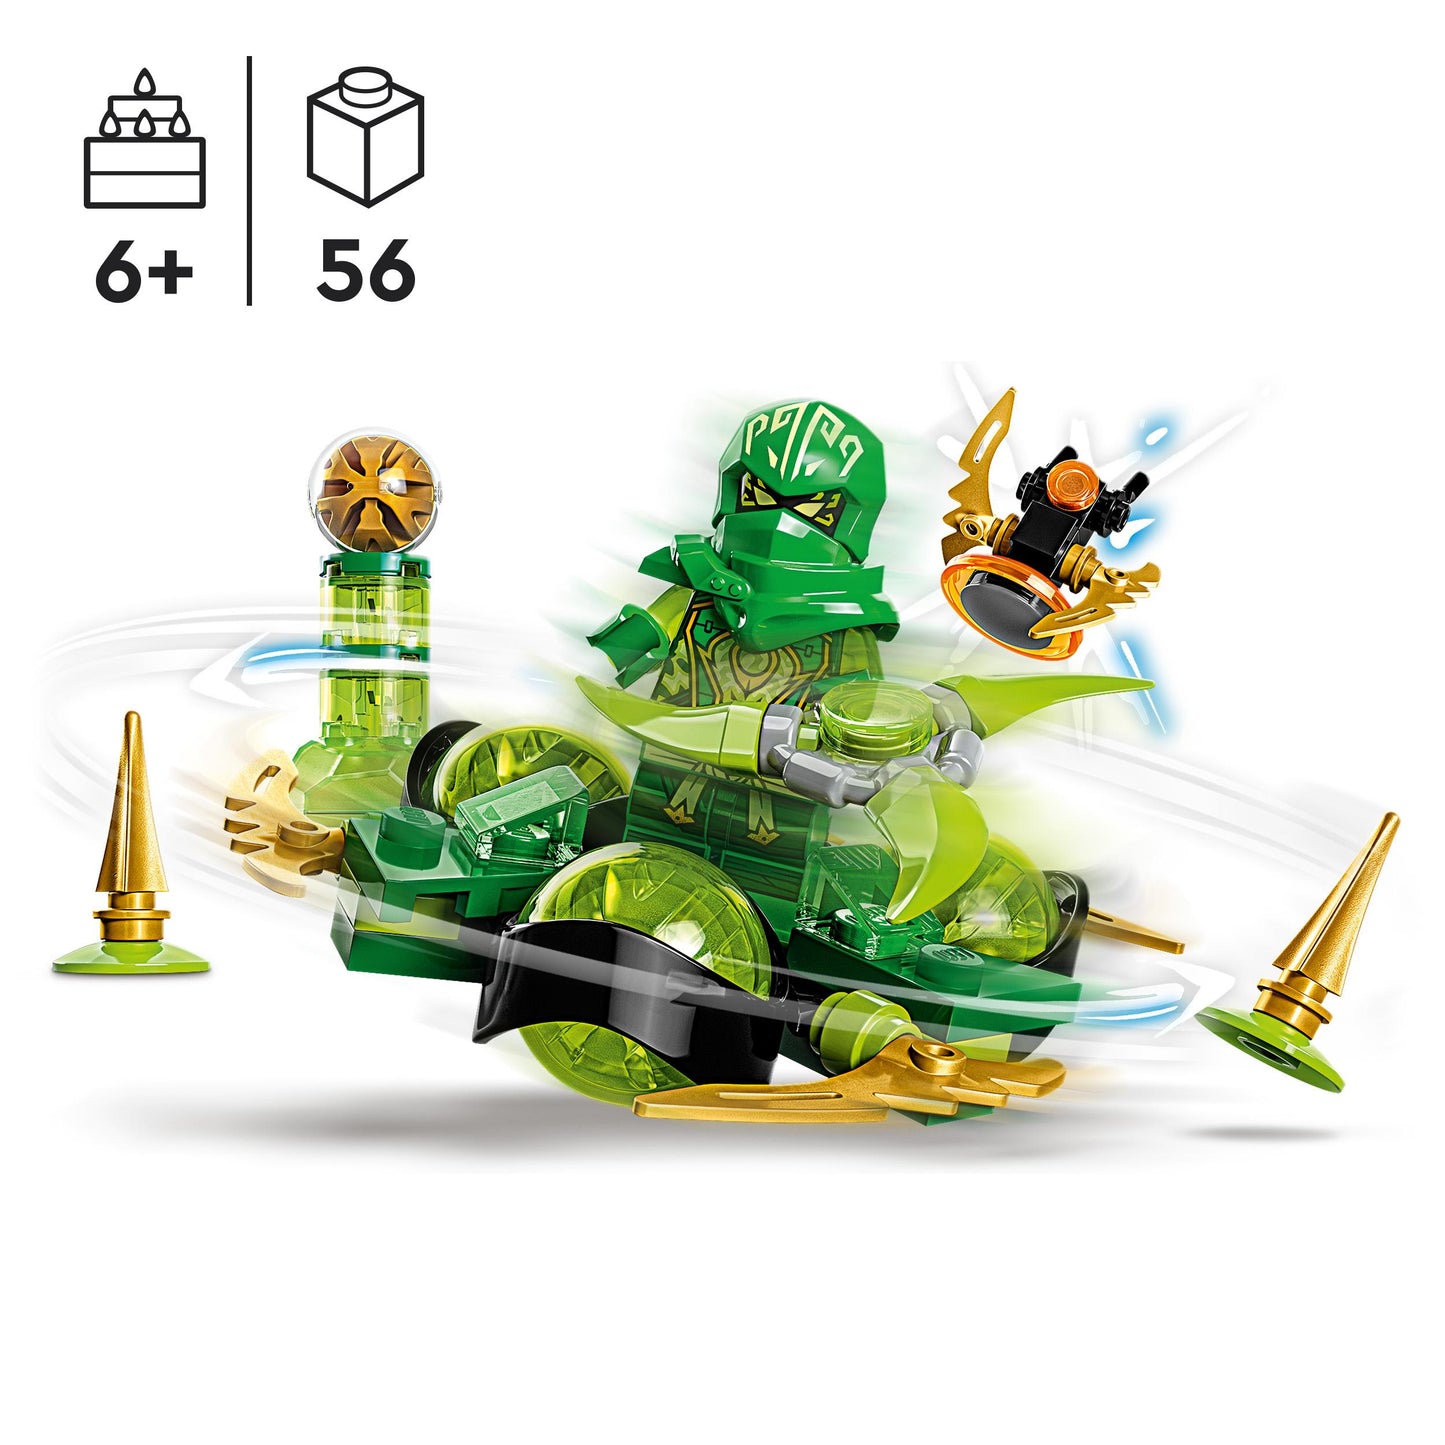 71779 LEGO Ninjago - Spin Power Dragon di Lloyd